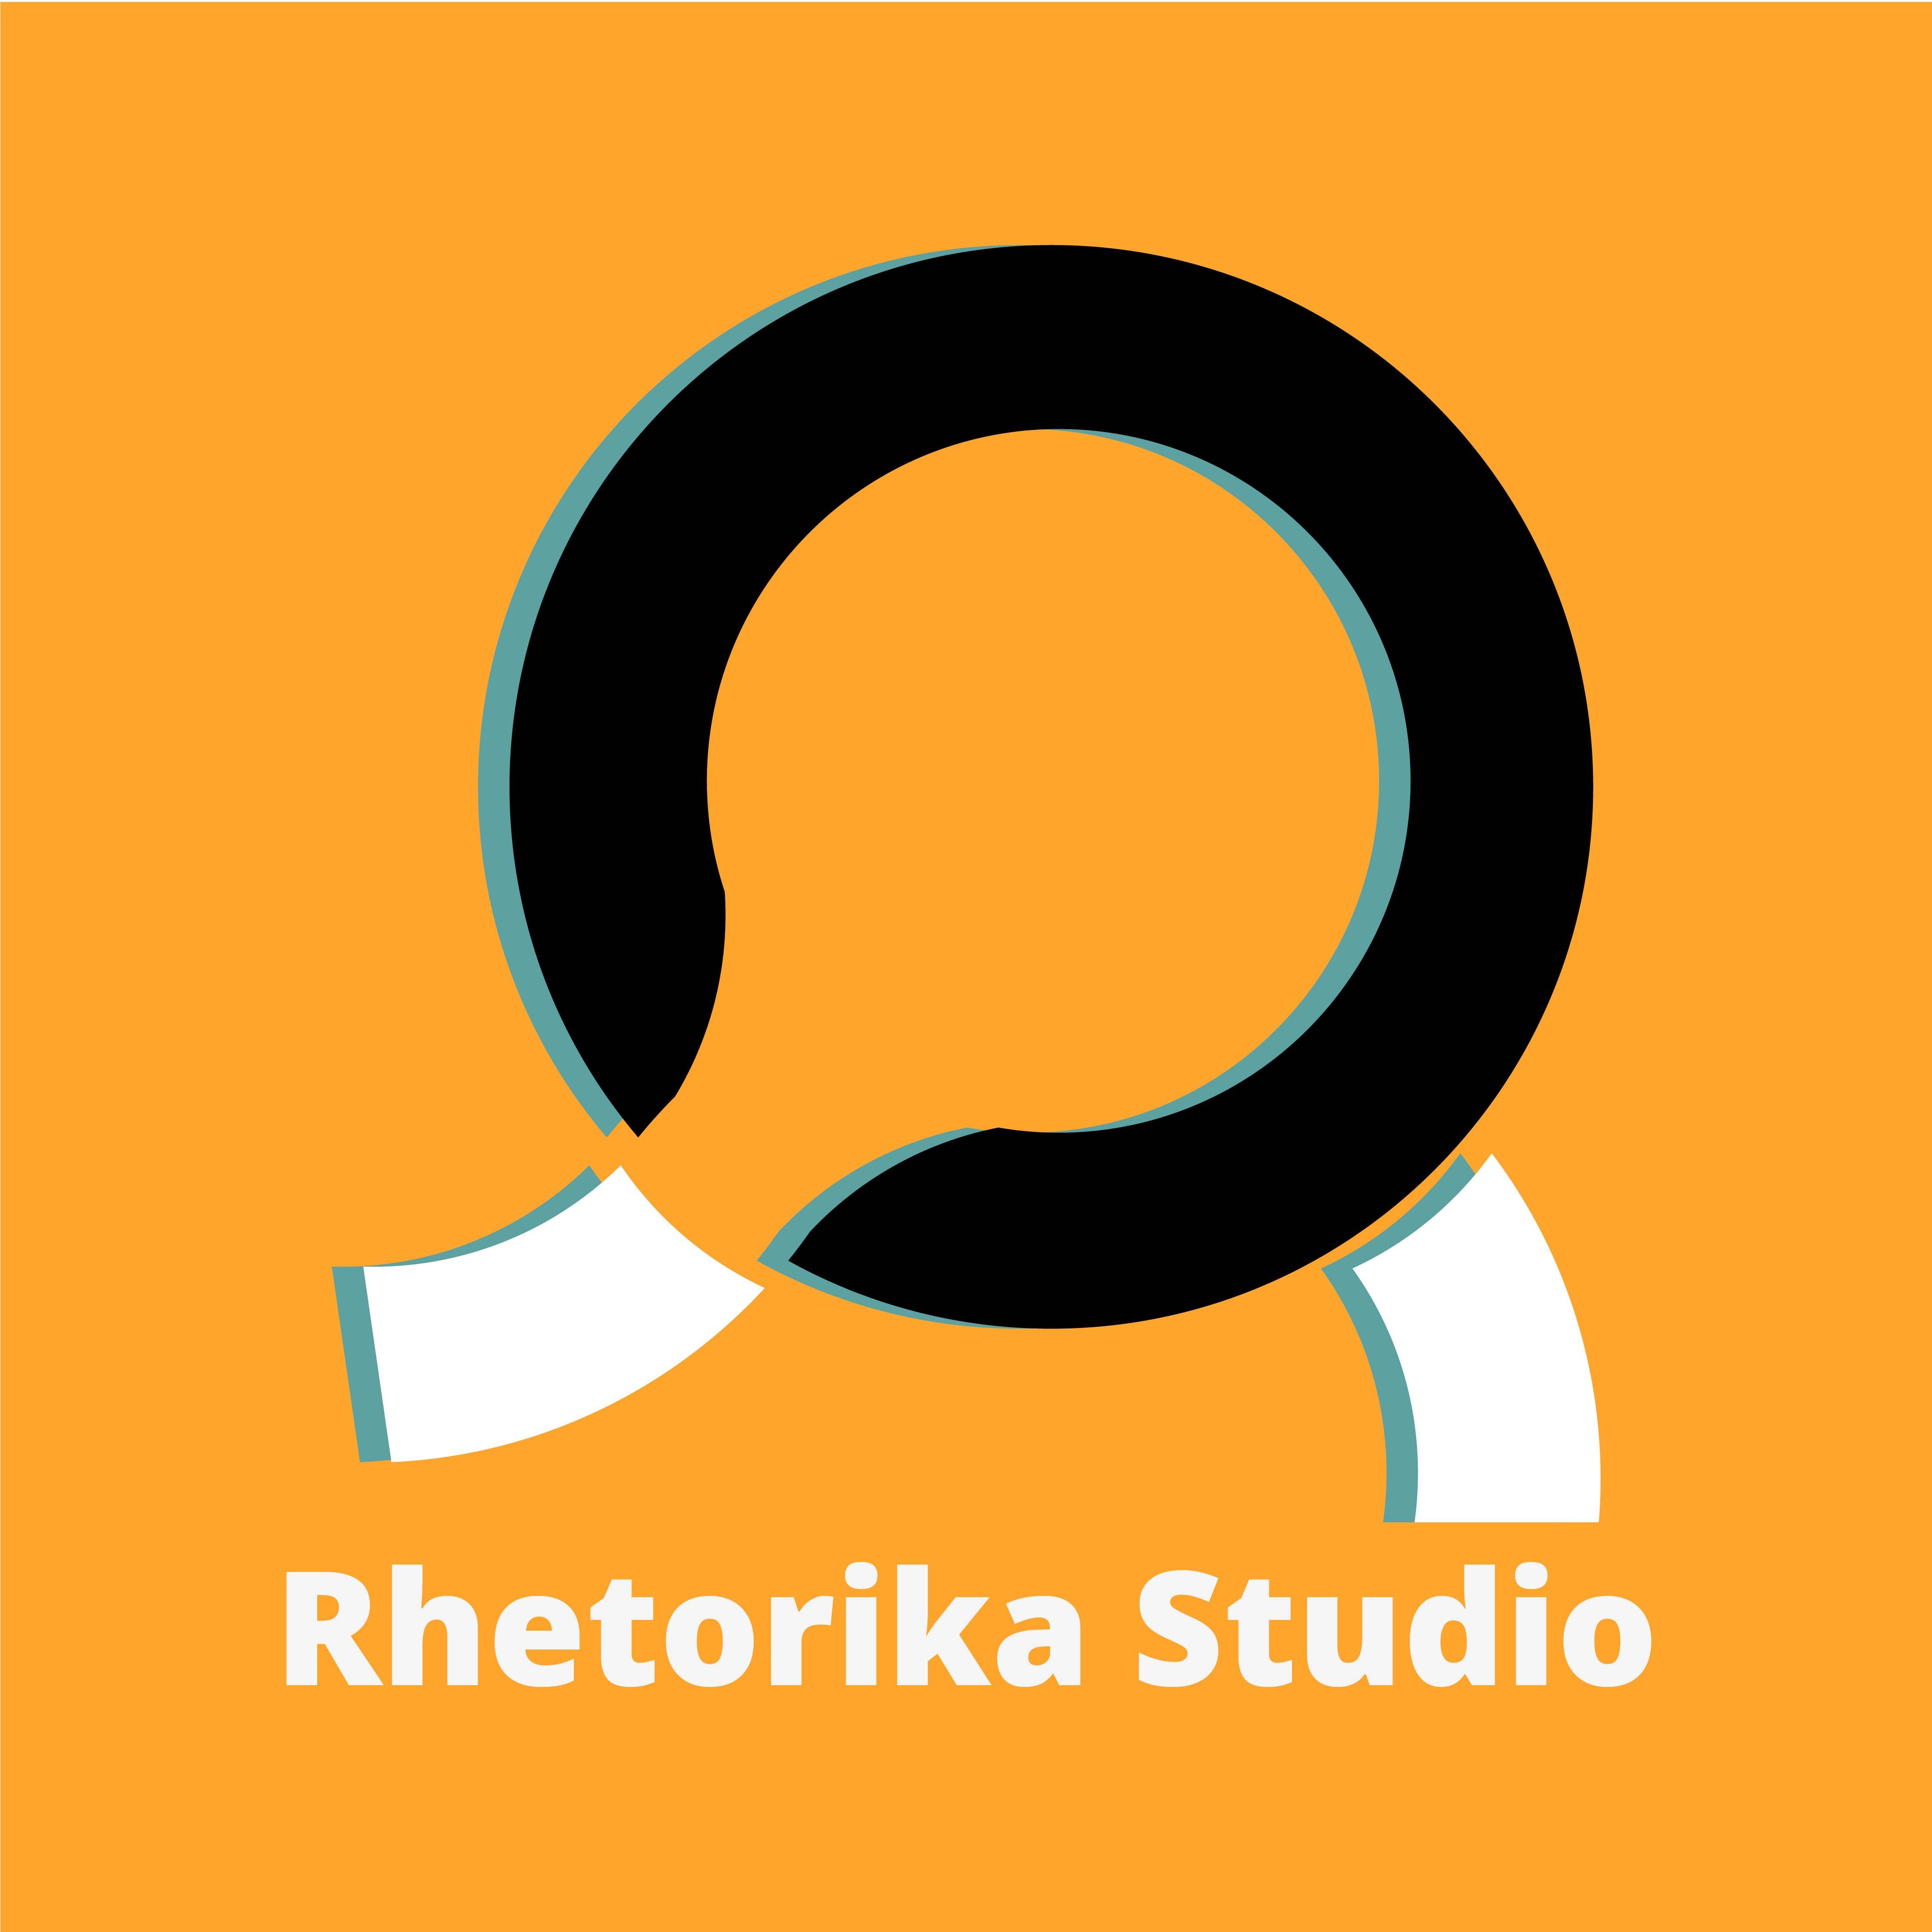 Rhetorika Studio